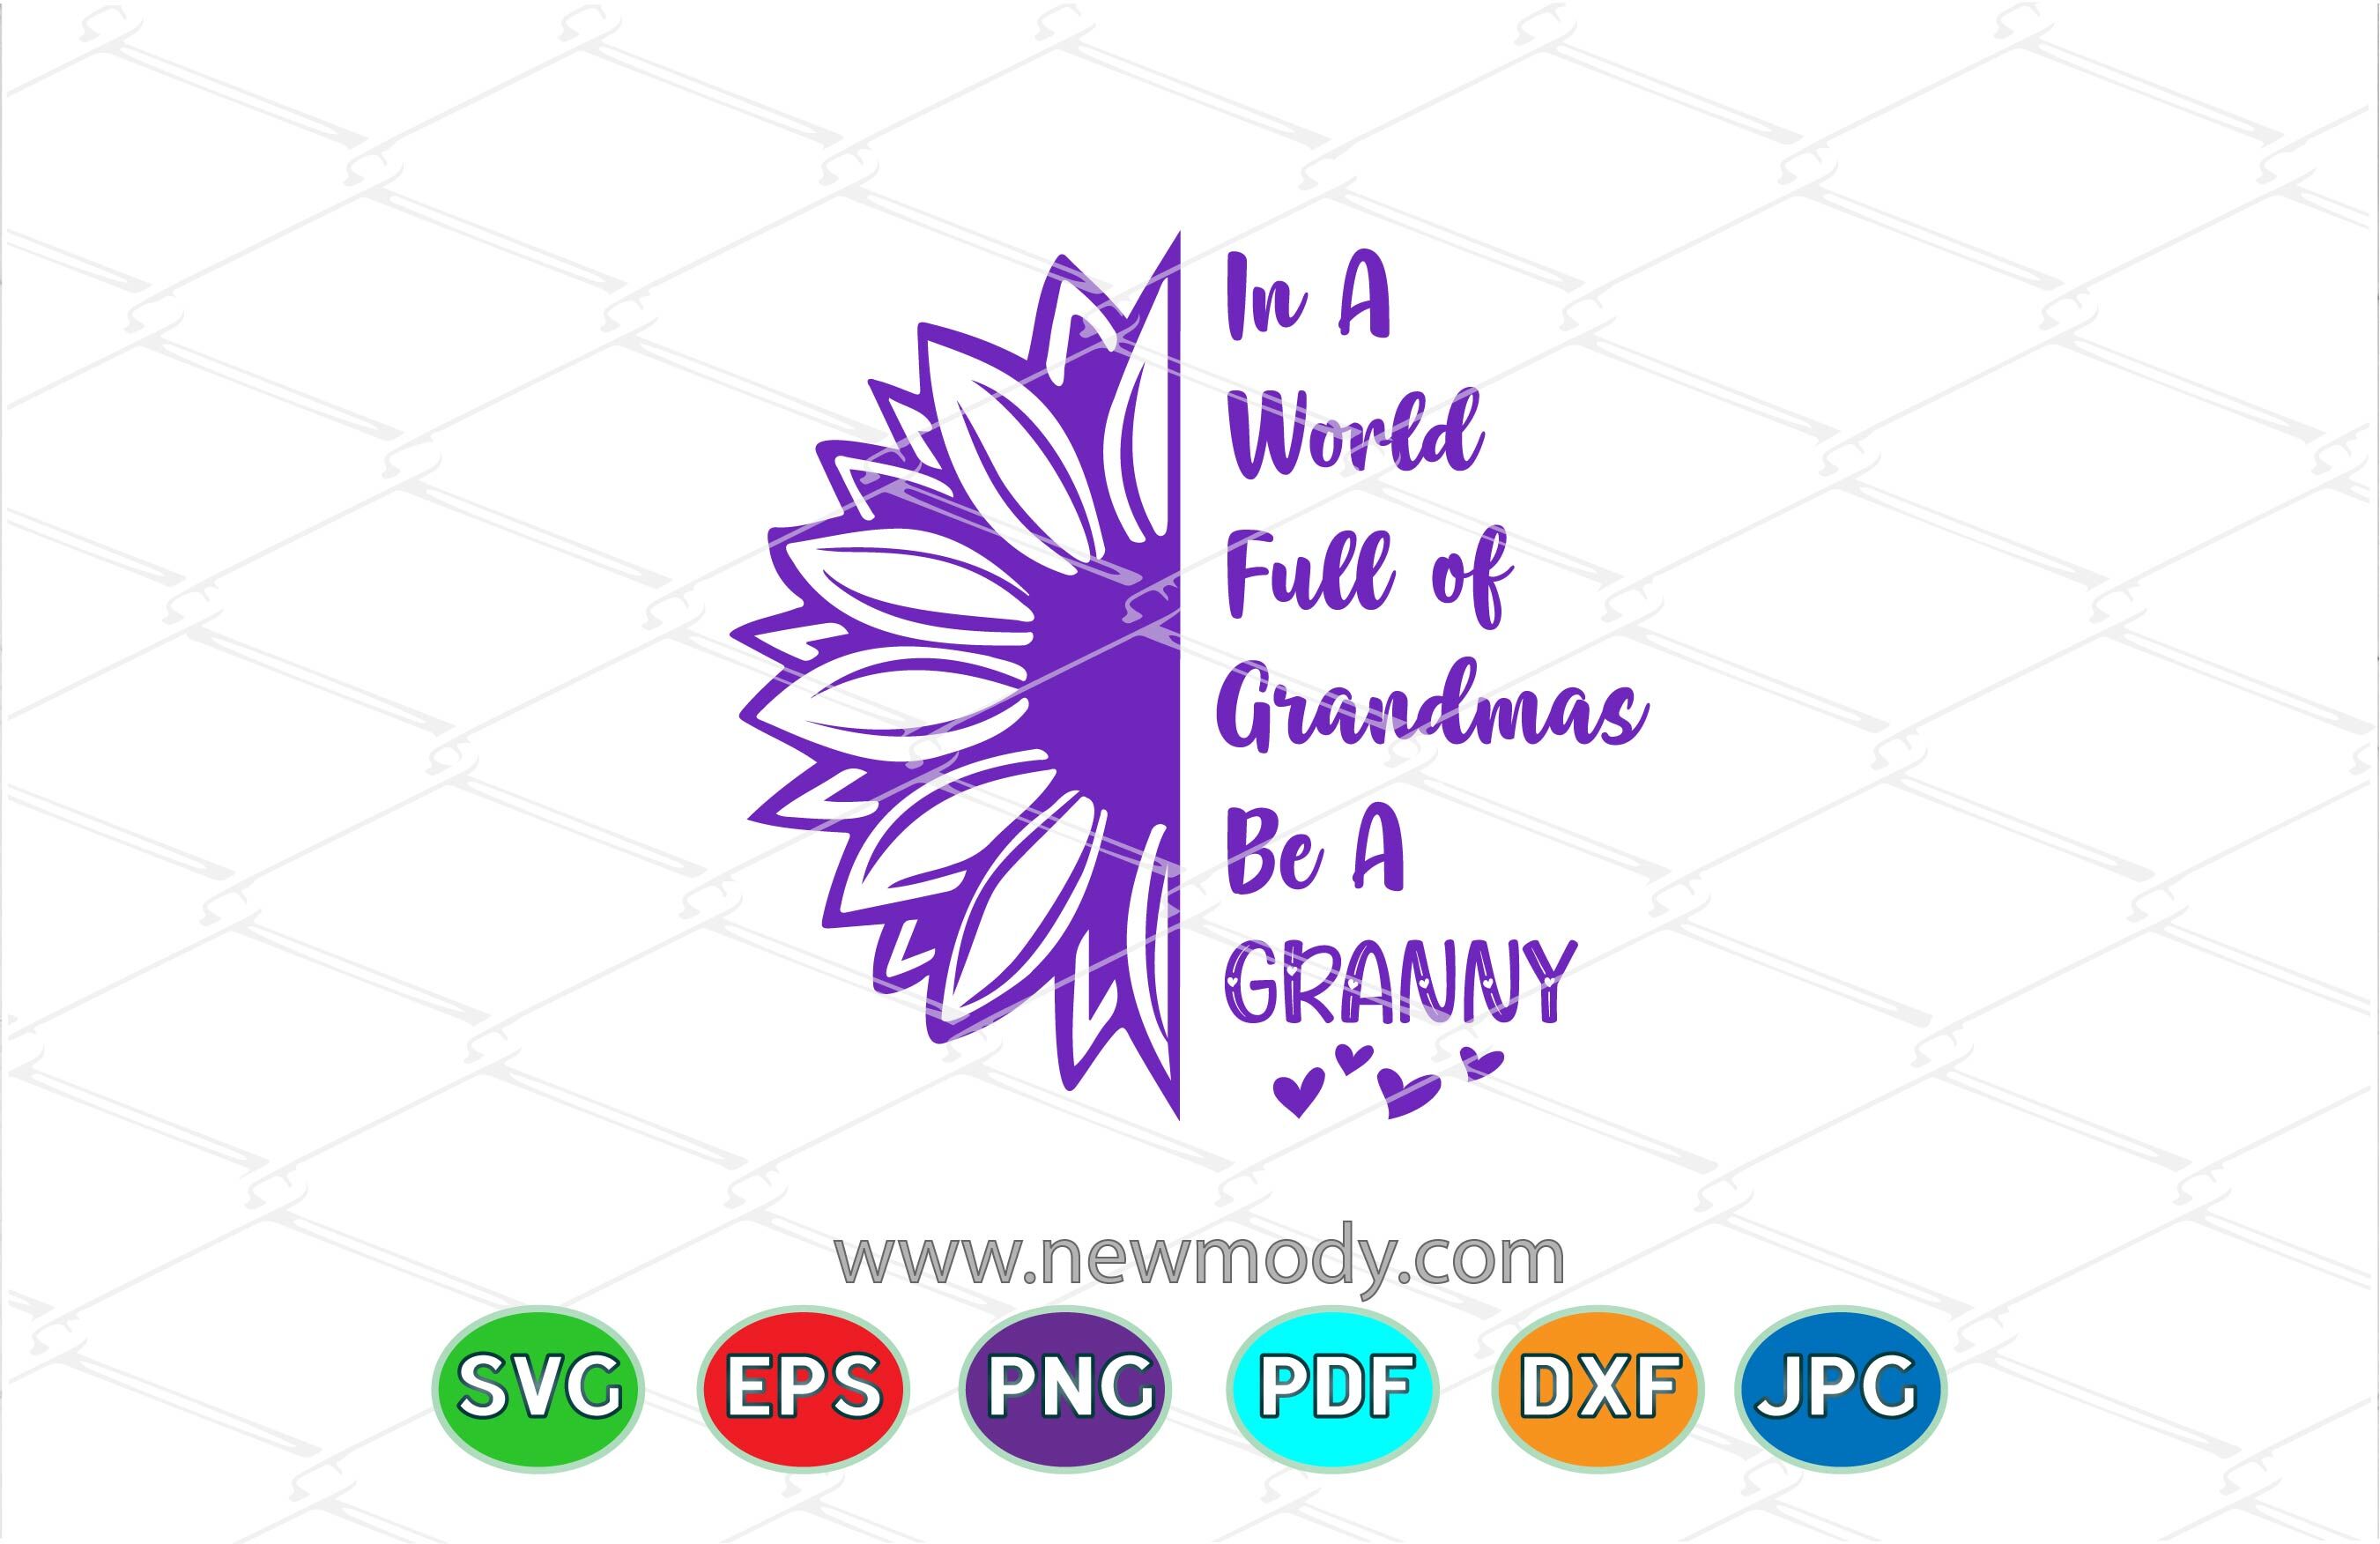 In A World Full Of Grandmas Be A Granny Svg Grandma Svg By Amittaart Thehungryjpeg Com